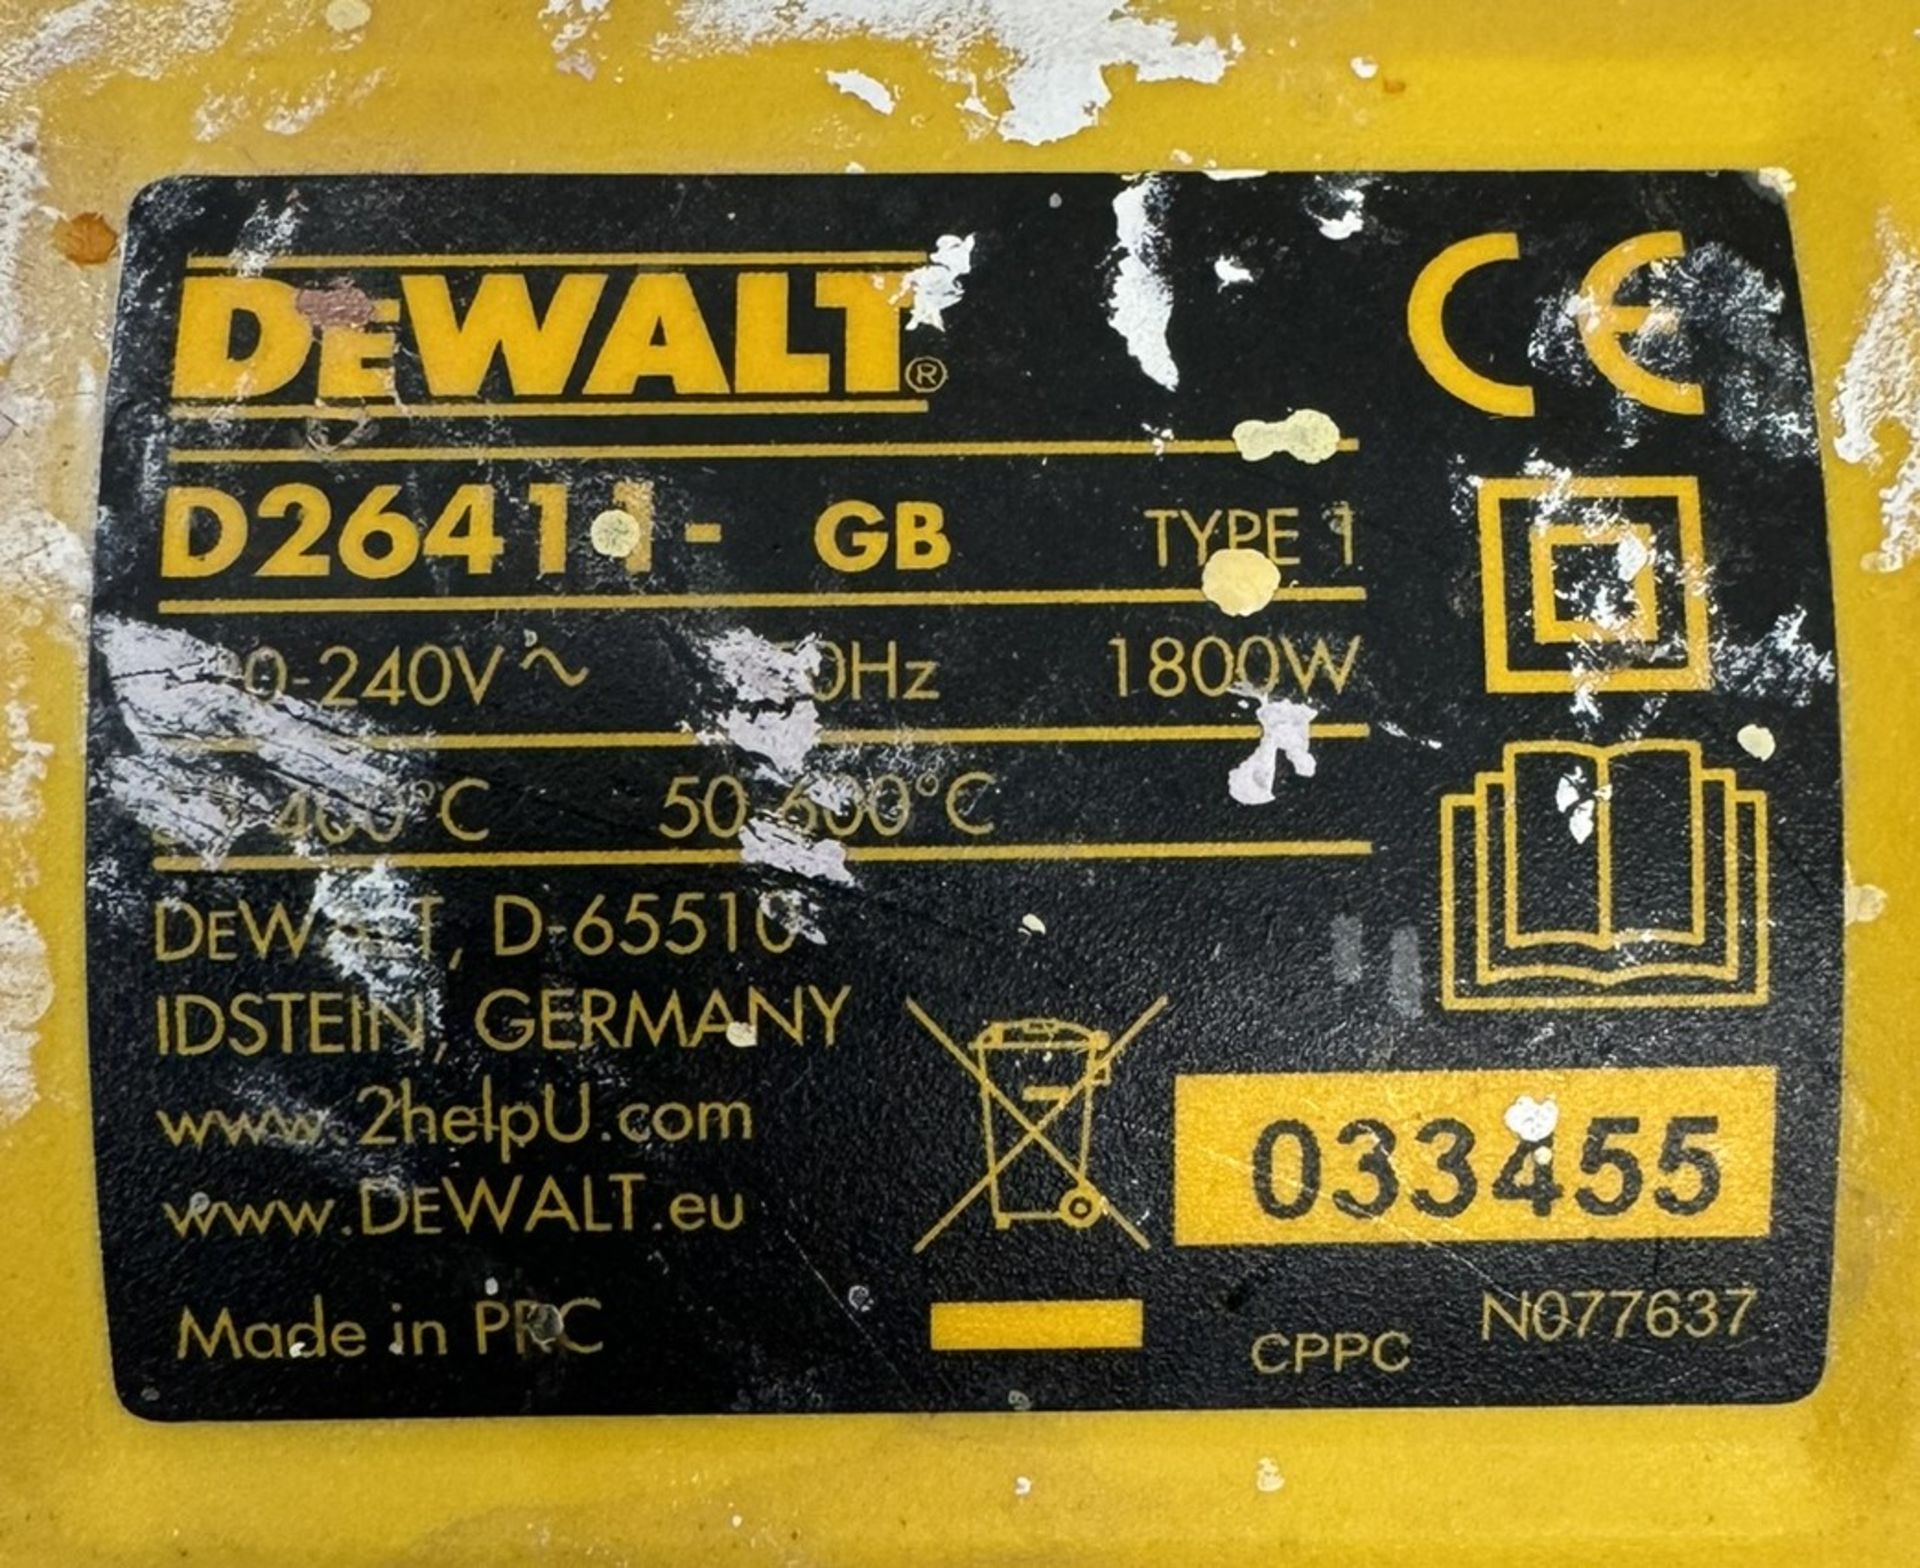 DeWALT D26411-GB 1800W Heat Gun - Image 3 of 4